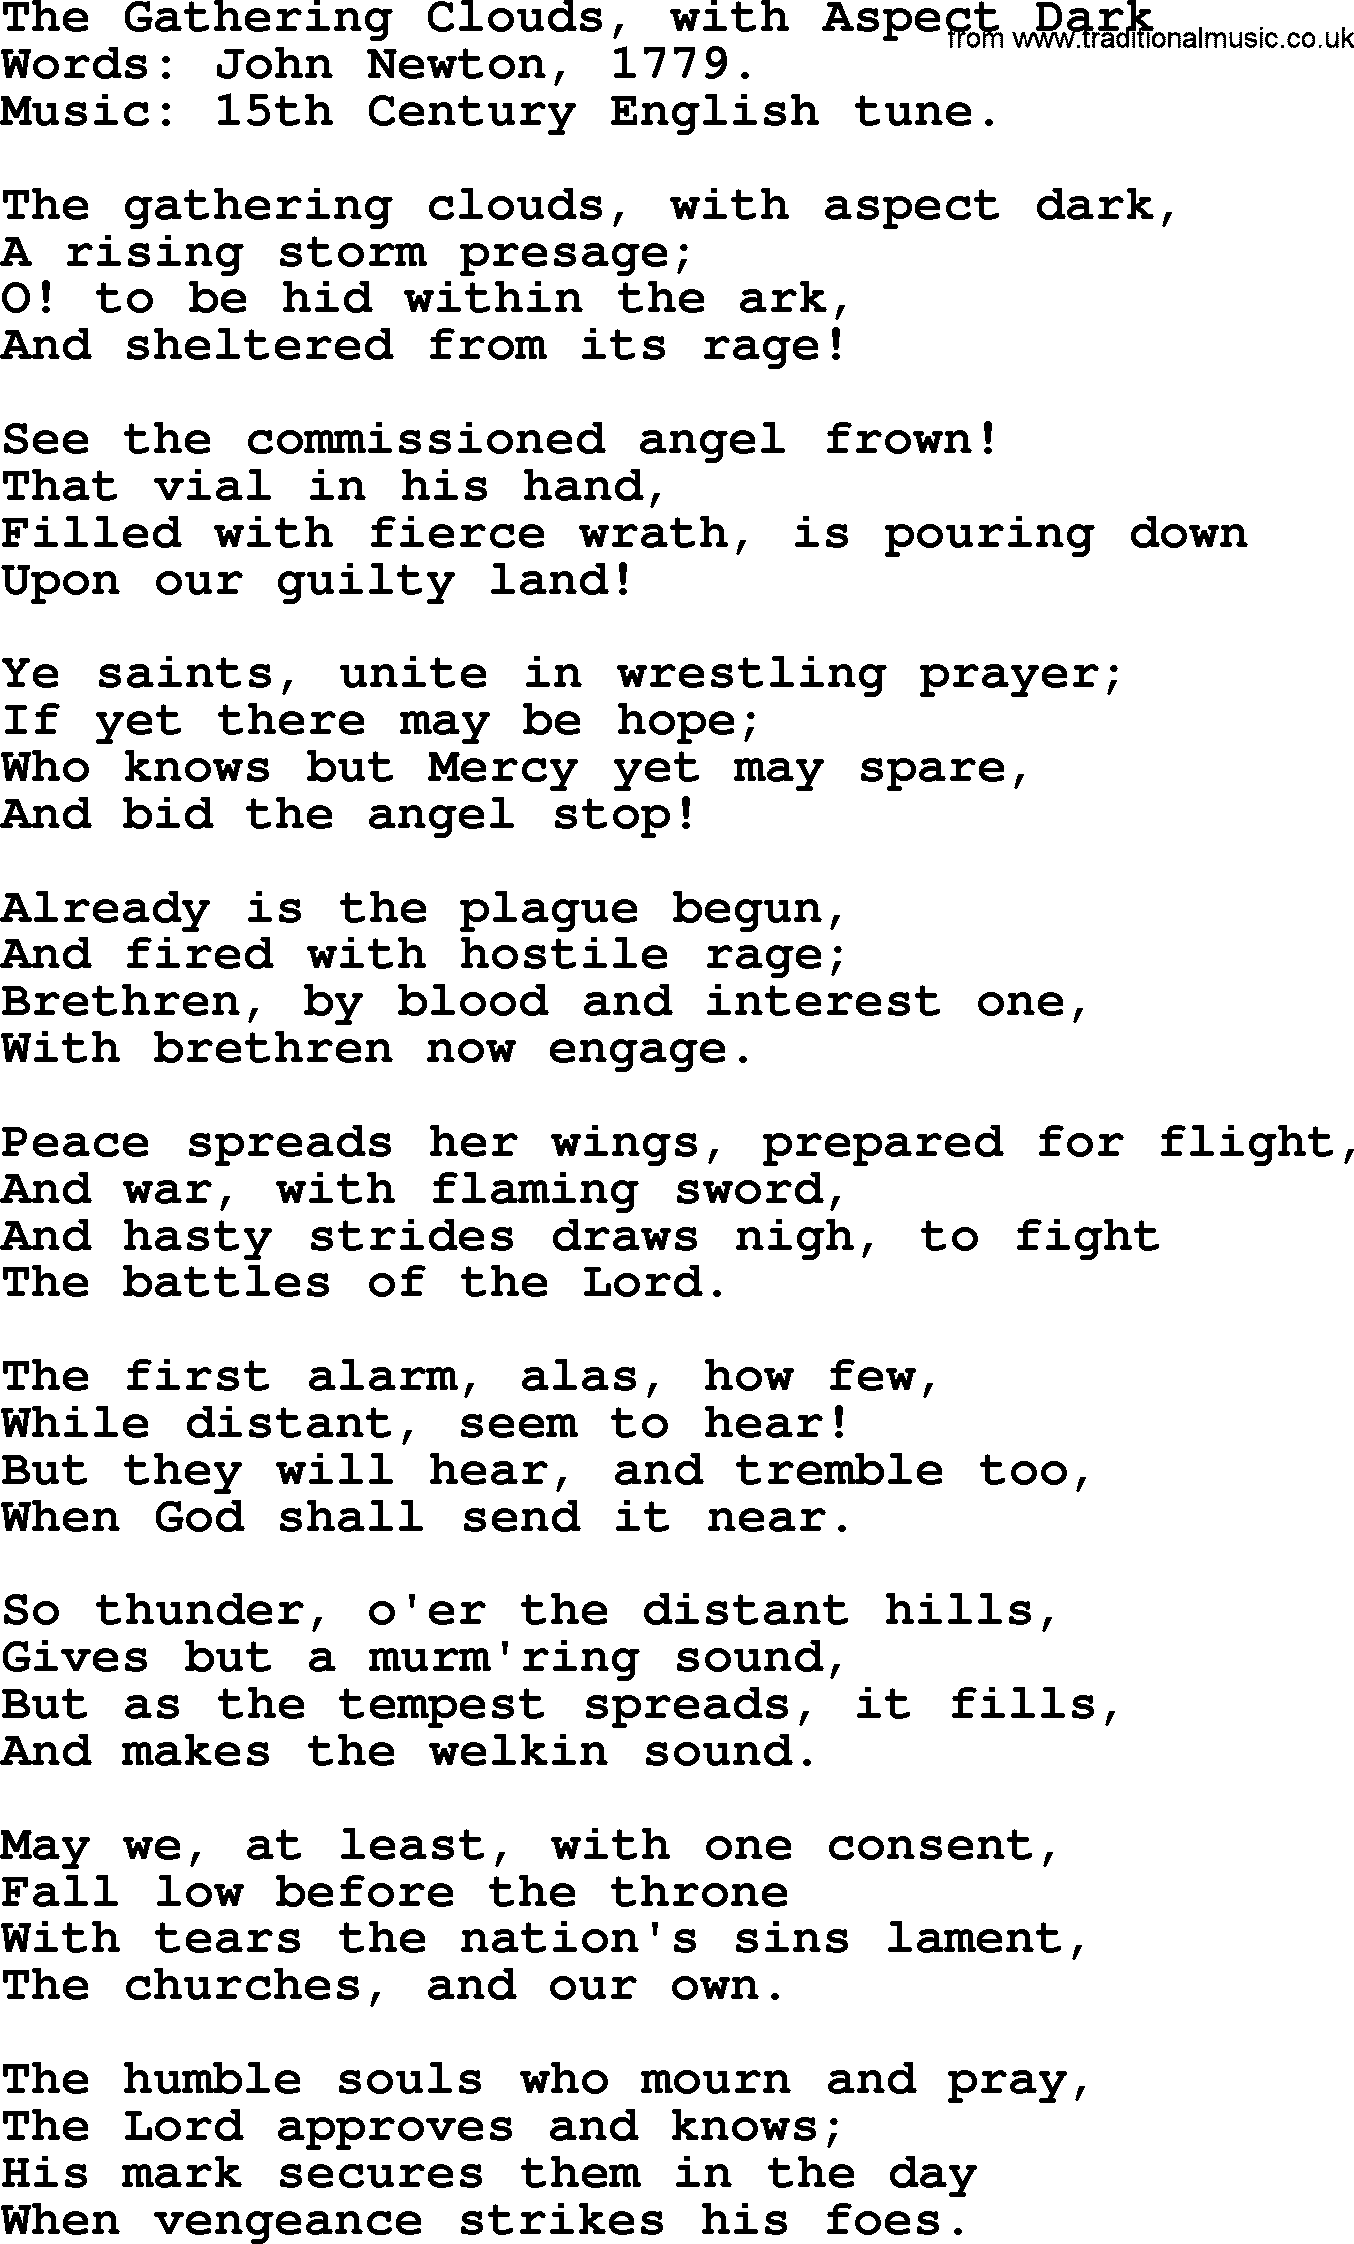 John Newton hymn: The Gathering Clouds, With Aspect Dark, lyrics